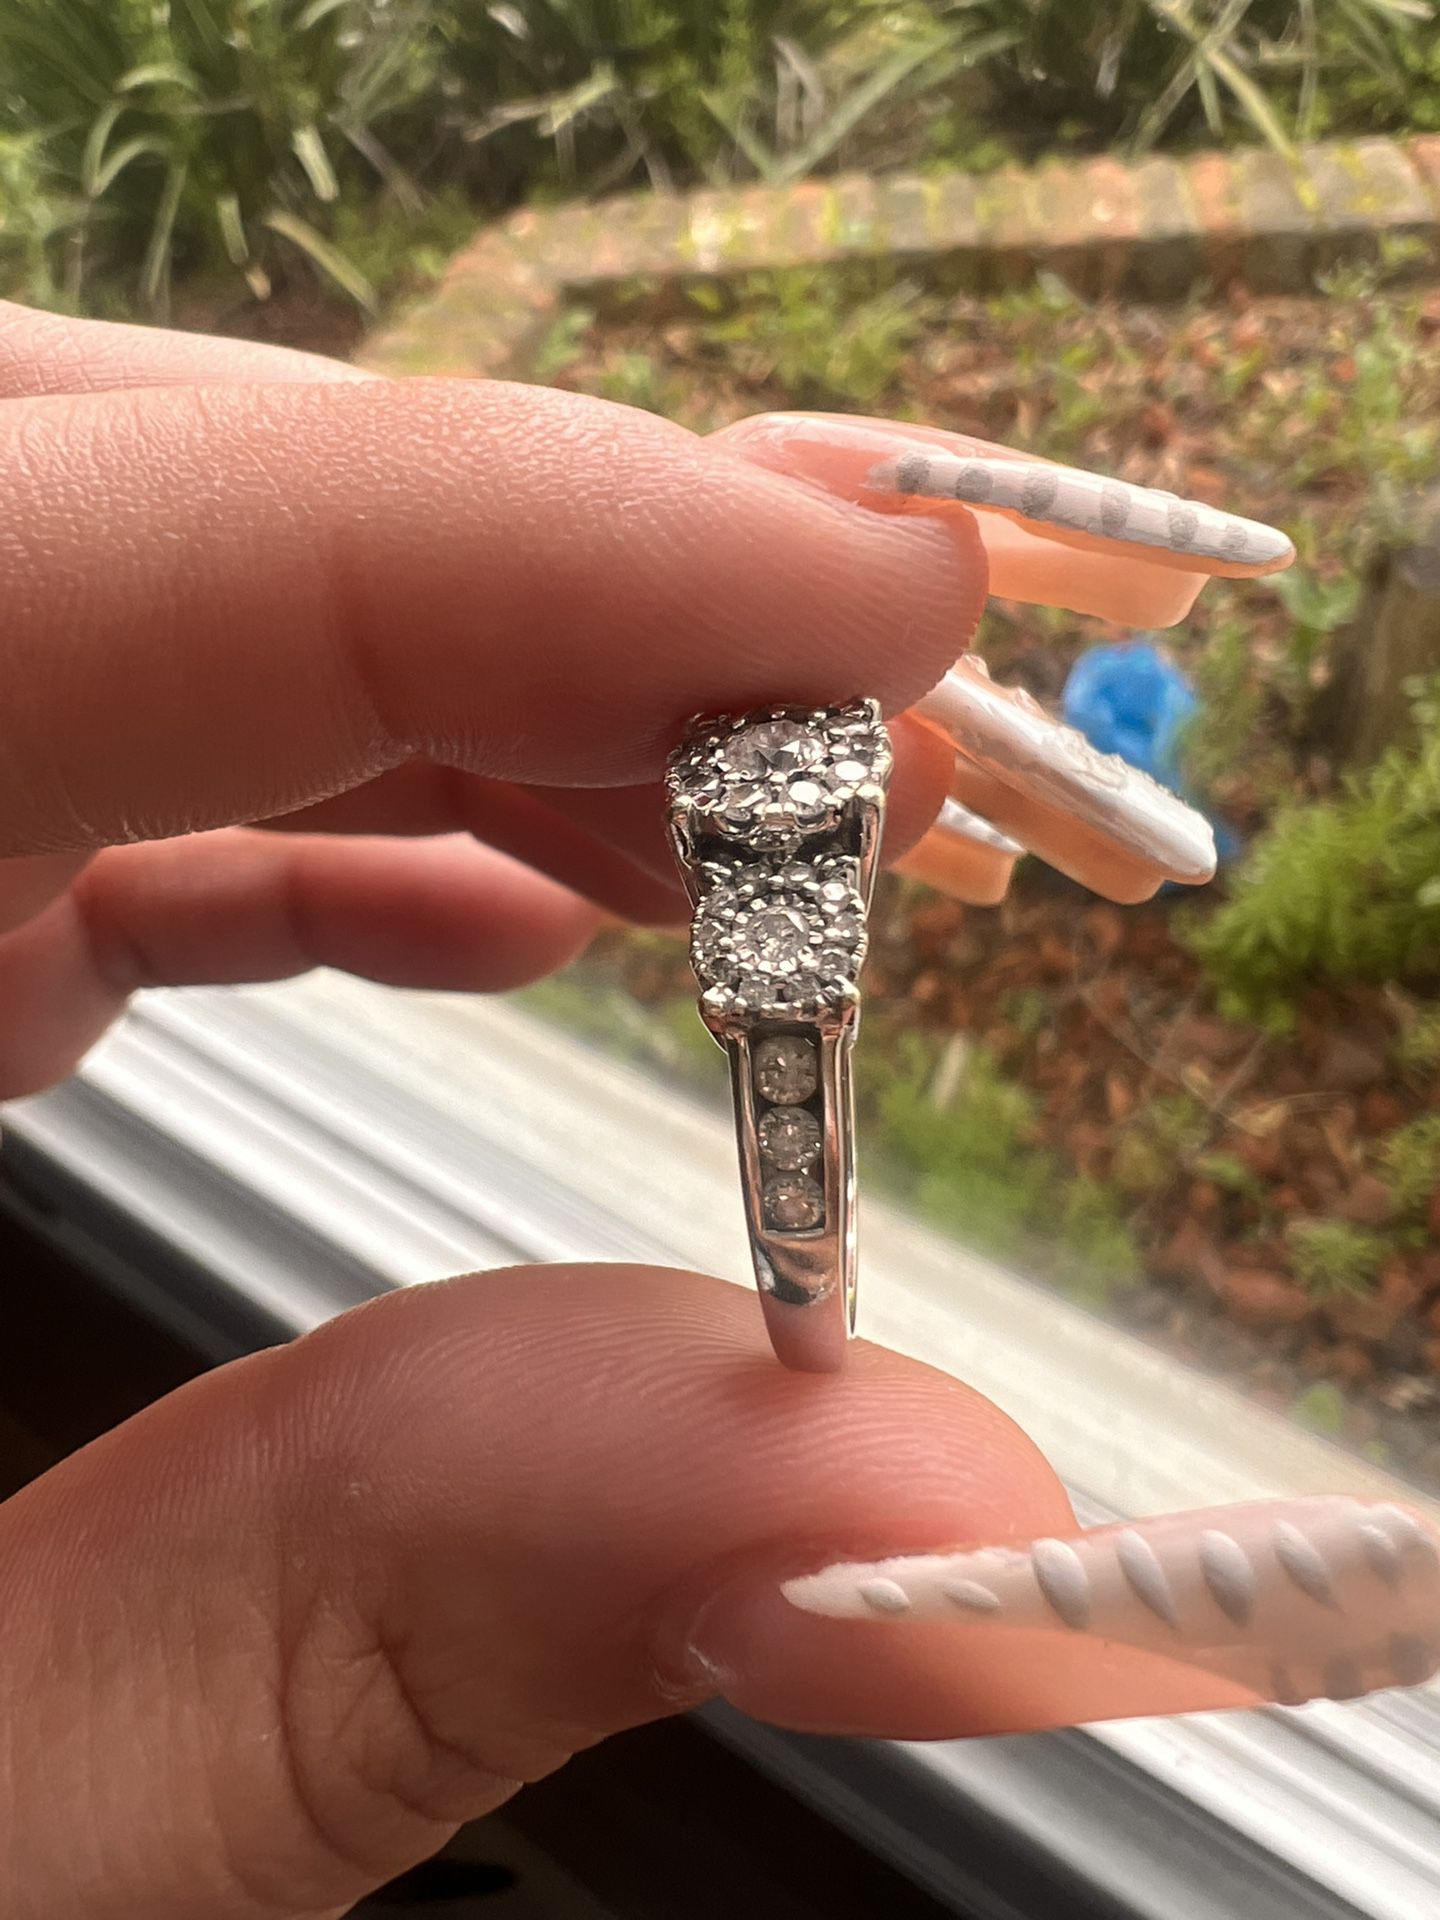 Diamond Three Stone Engagement Ring (3/4 ct. t.w.) in 14k Gold